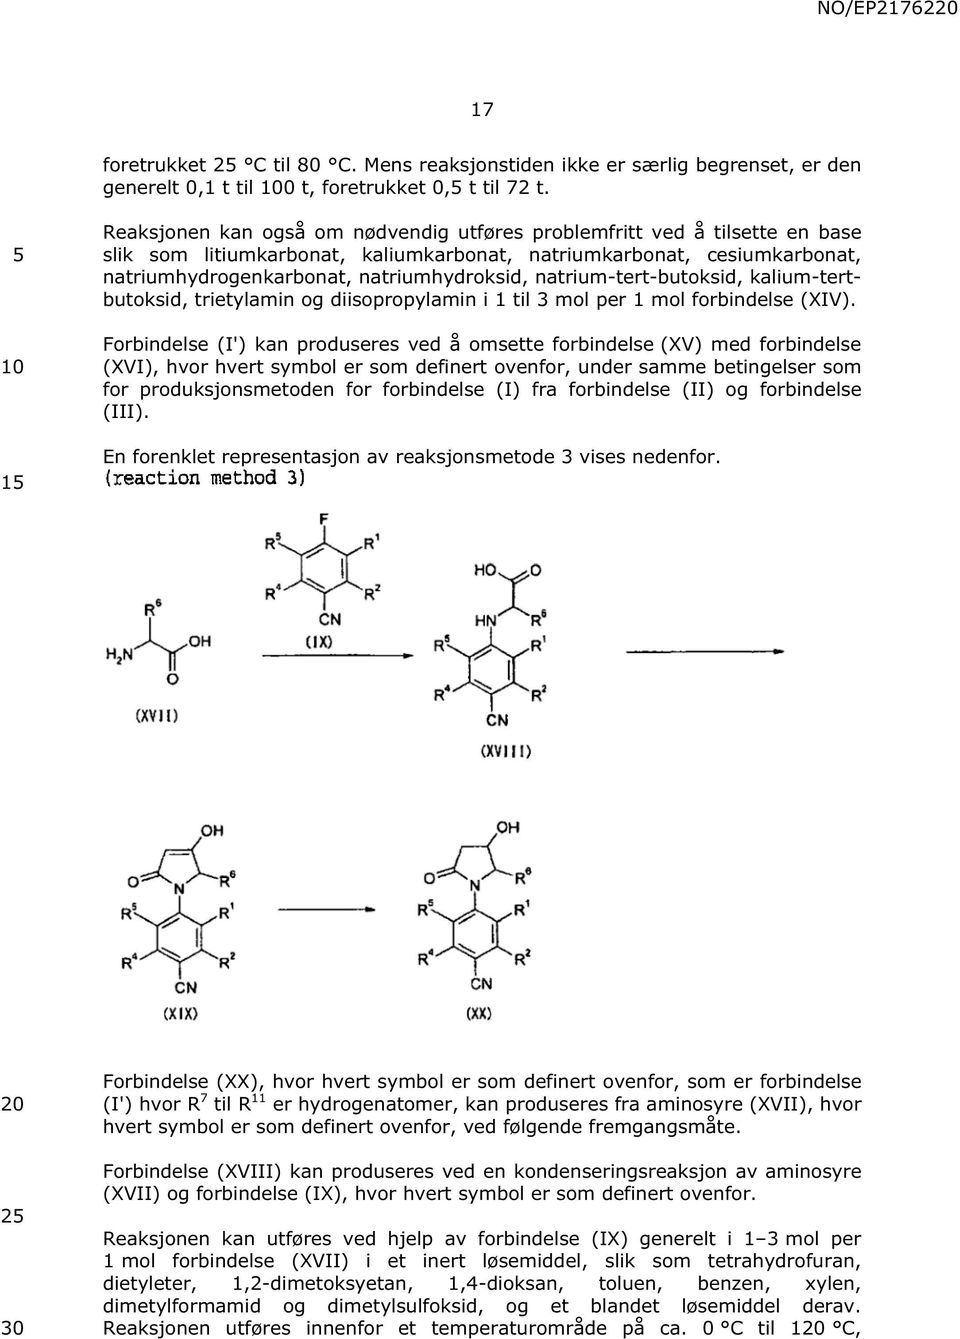 natrium-tert-butoksid, kalium-tertbutoksid, trietylamin og diisopropylamin i 1 til 3 mol per 1 mol forbindelse (XIV).